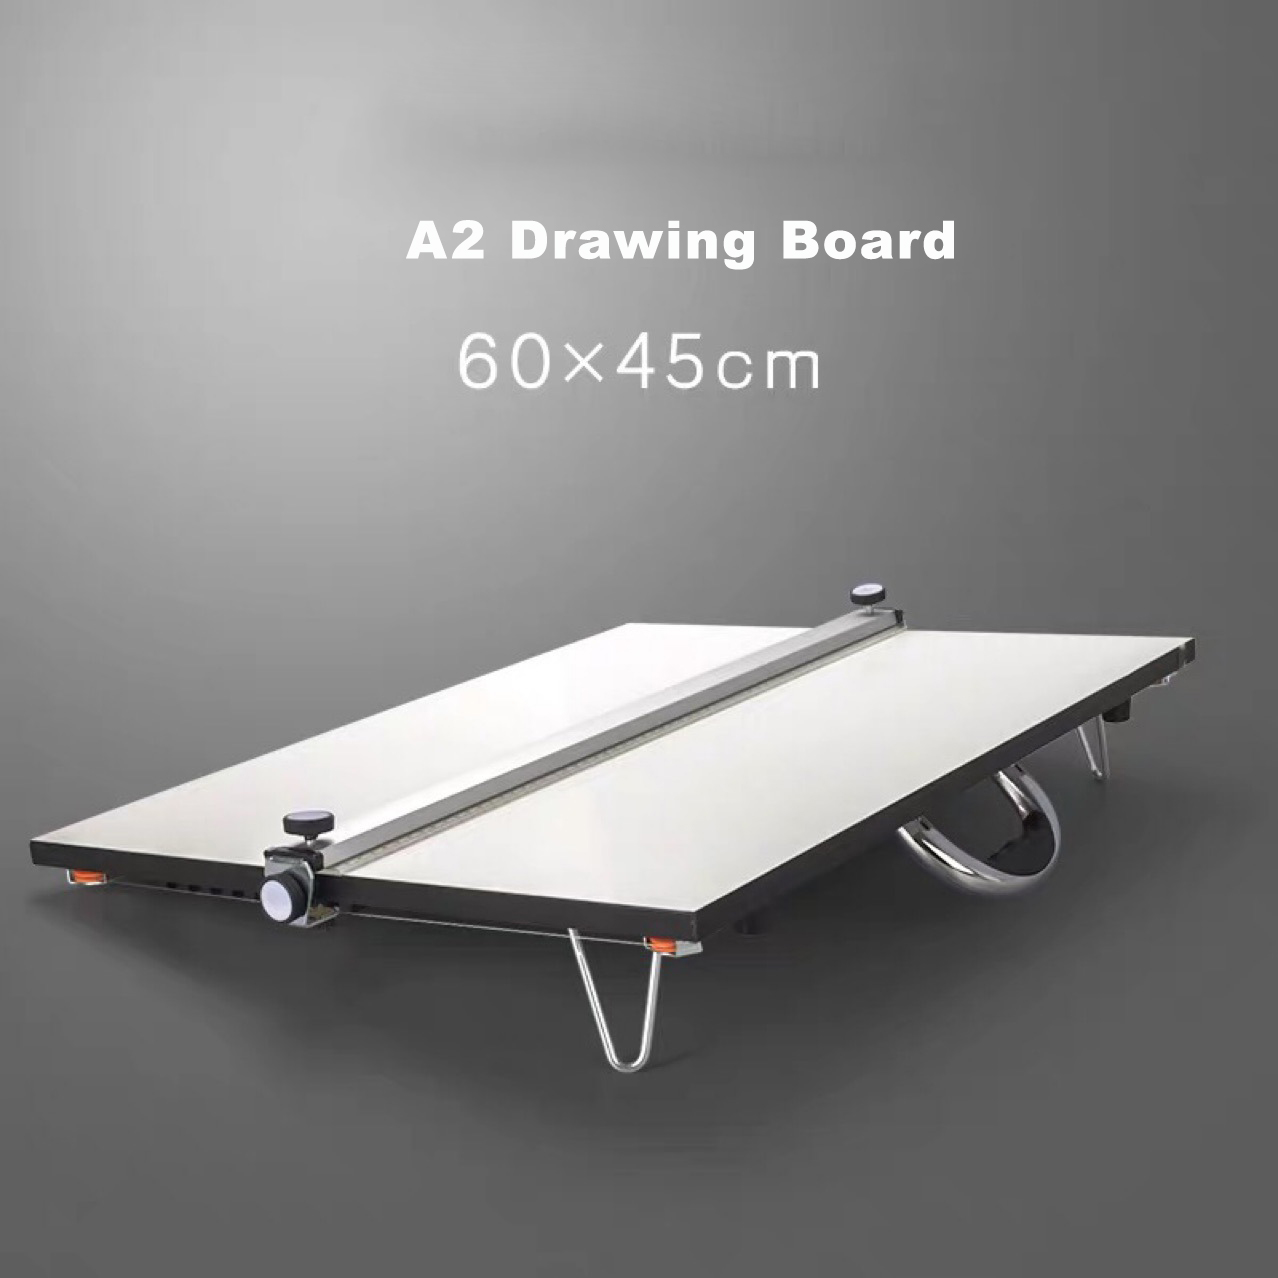 A2 Drawing Board